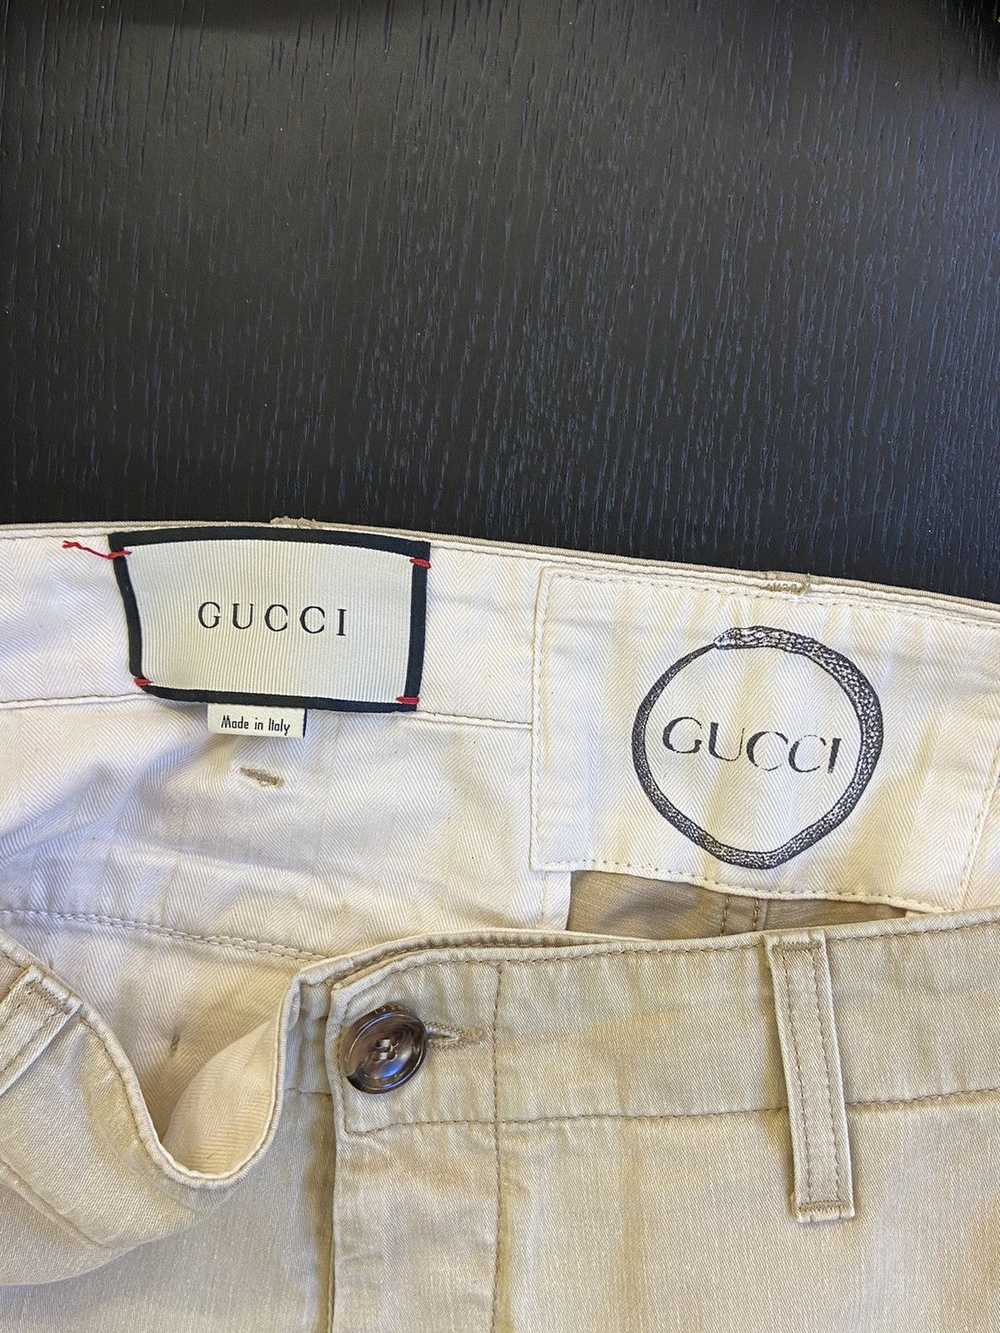 Gucci Gucci Embroidered Dragon Pants - image 4